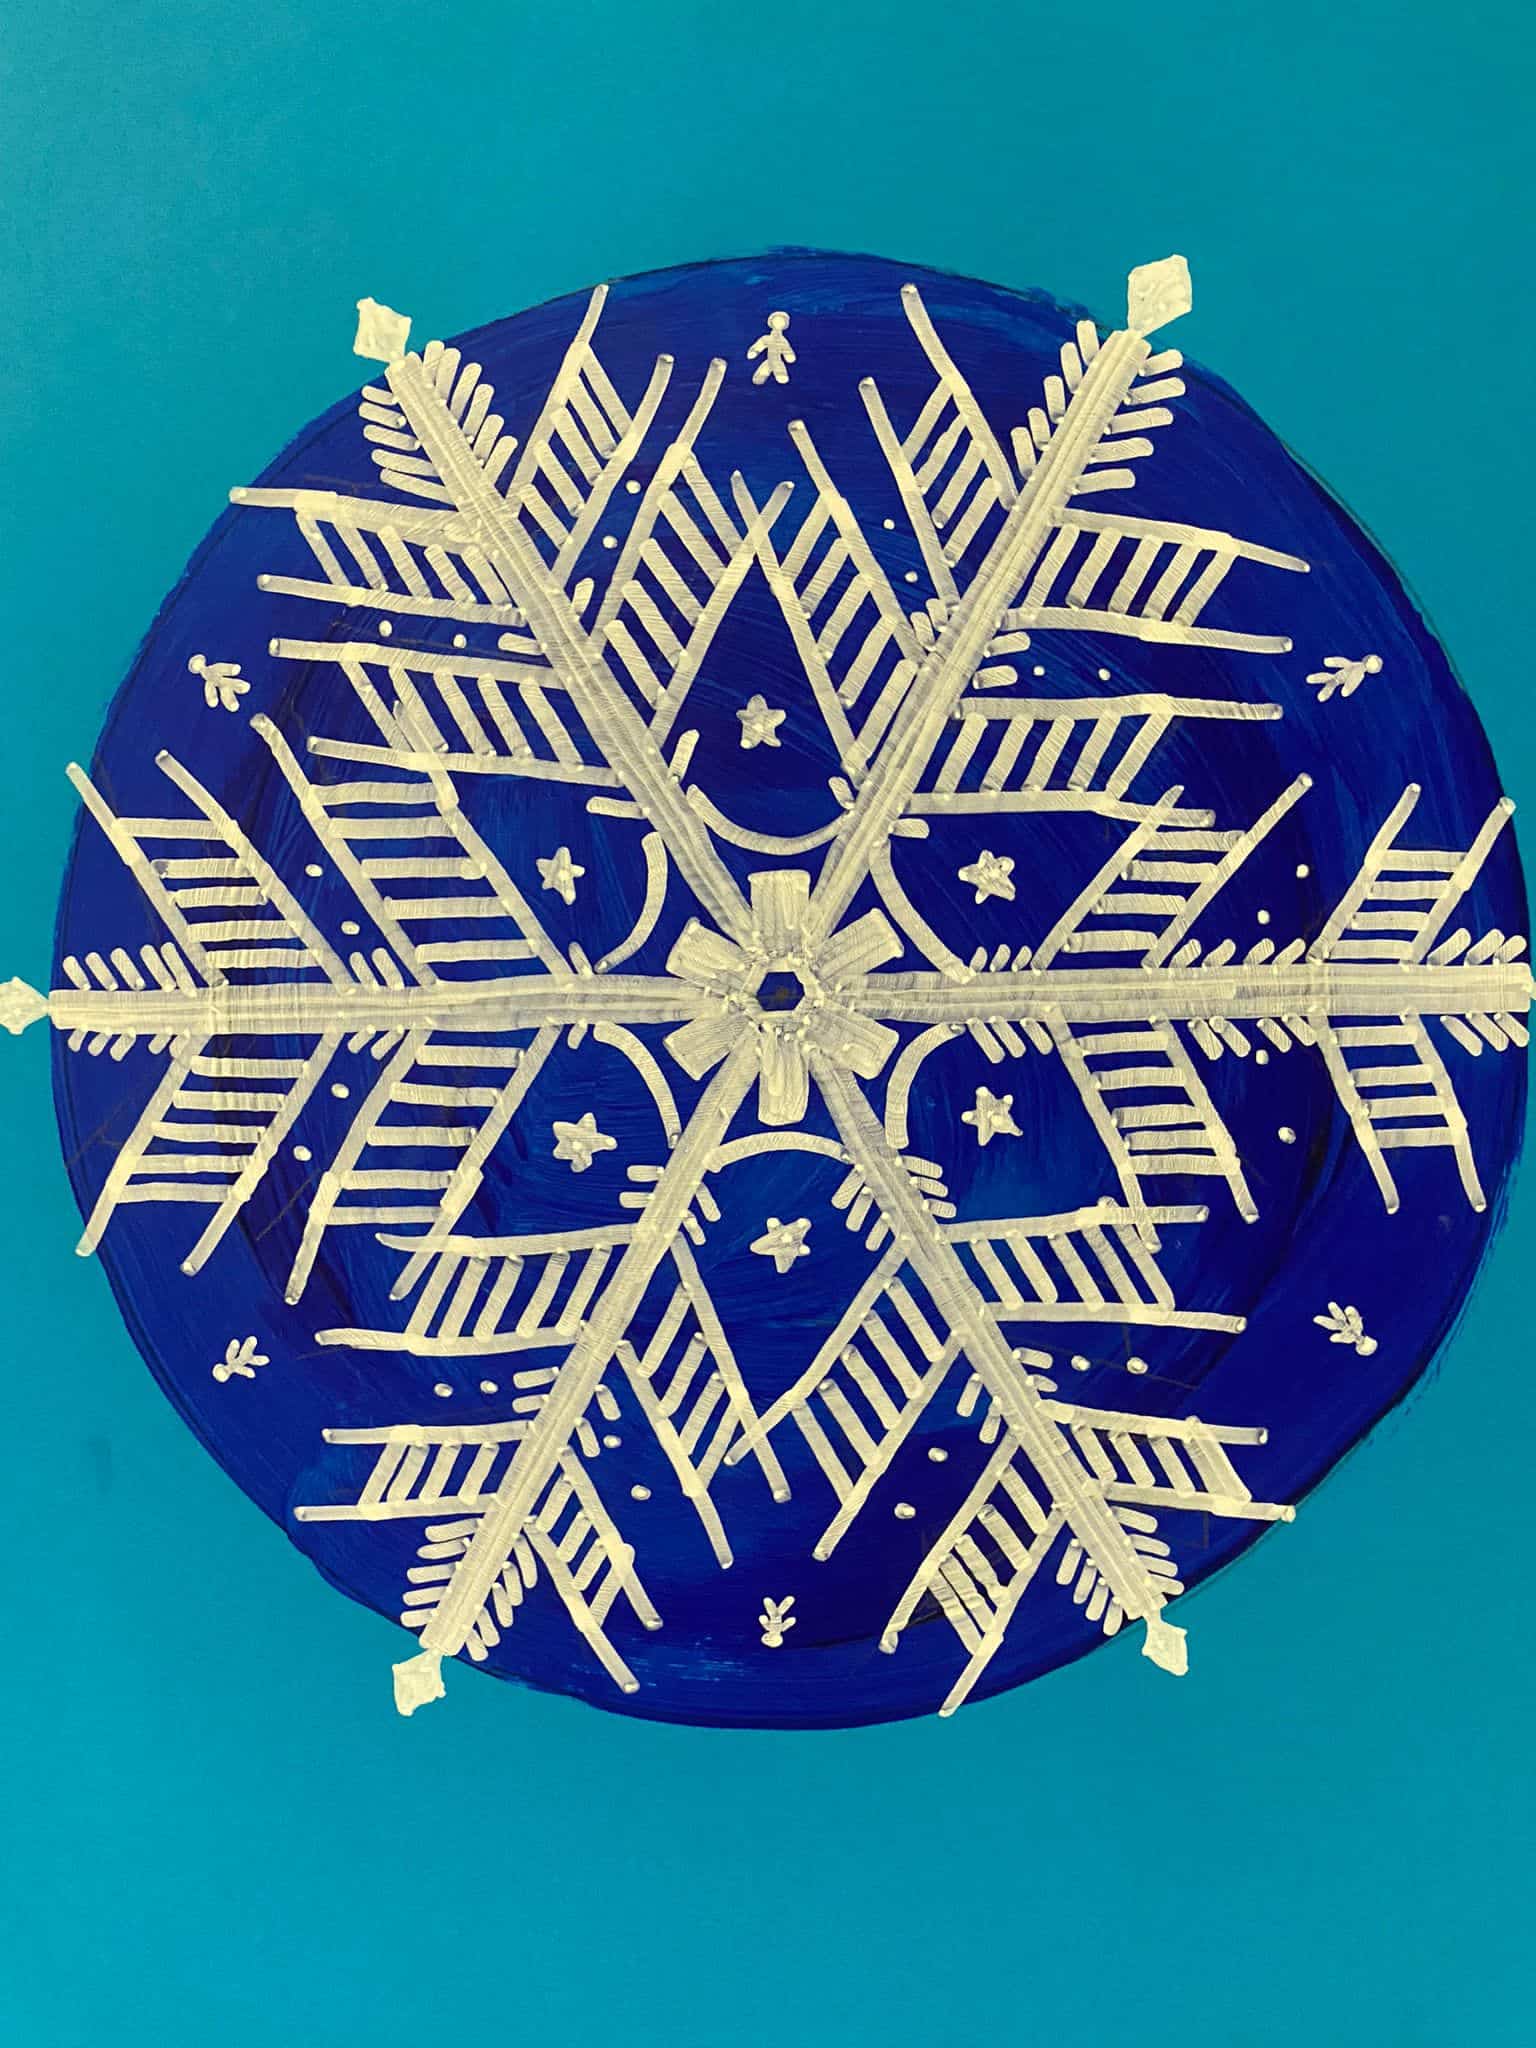 The Geometry of Snowflakes Workshop